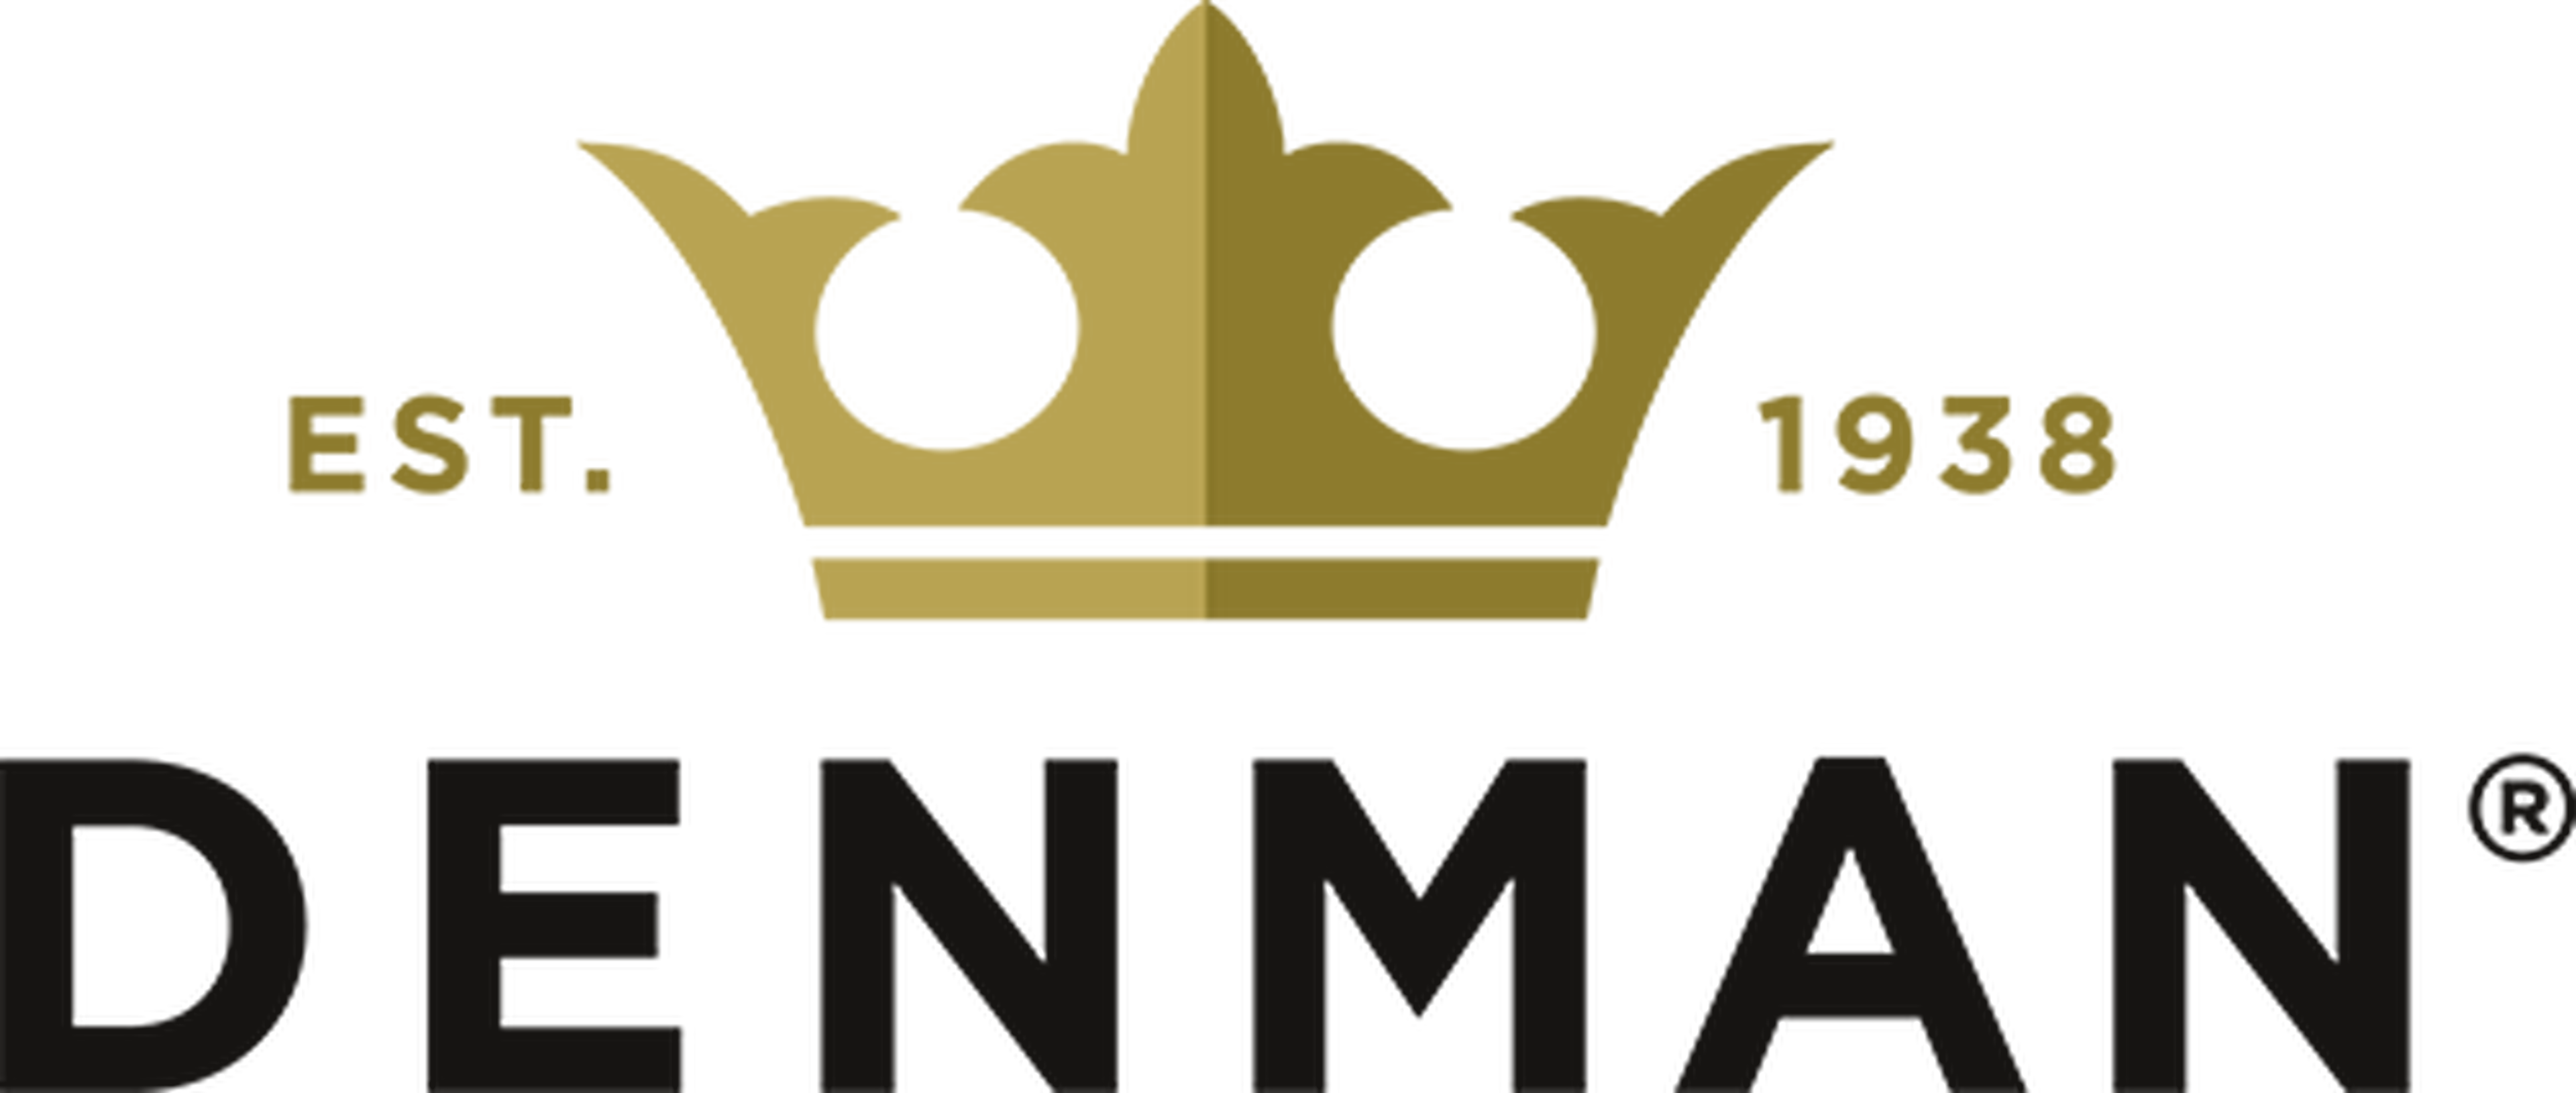 Denman logotype